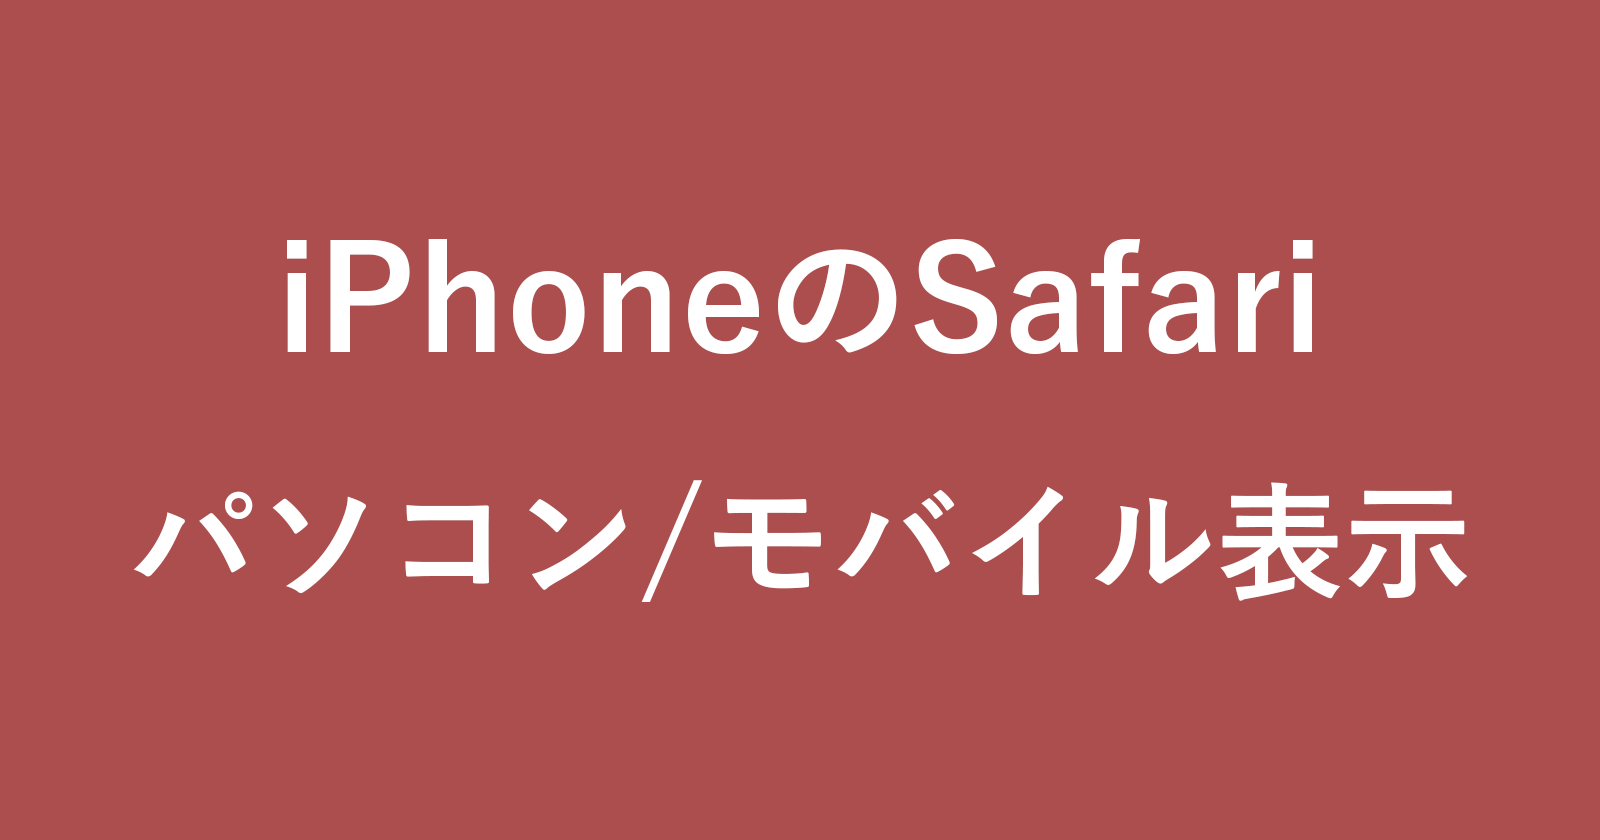 iphone safari pc mobile